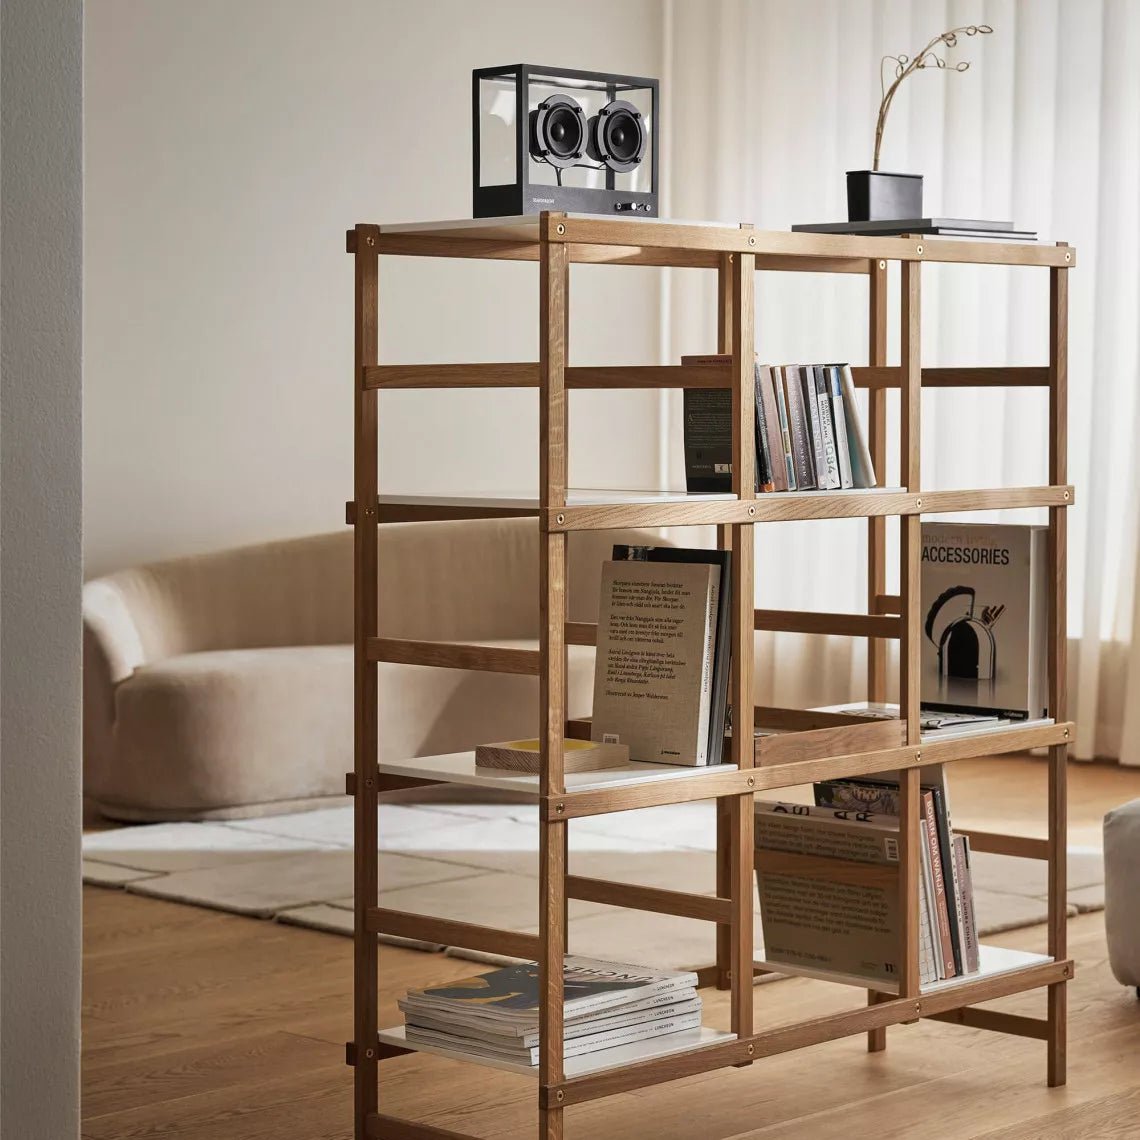 Frame shelving system High - Shelf Shelf by Design House Stockholm